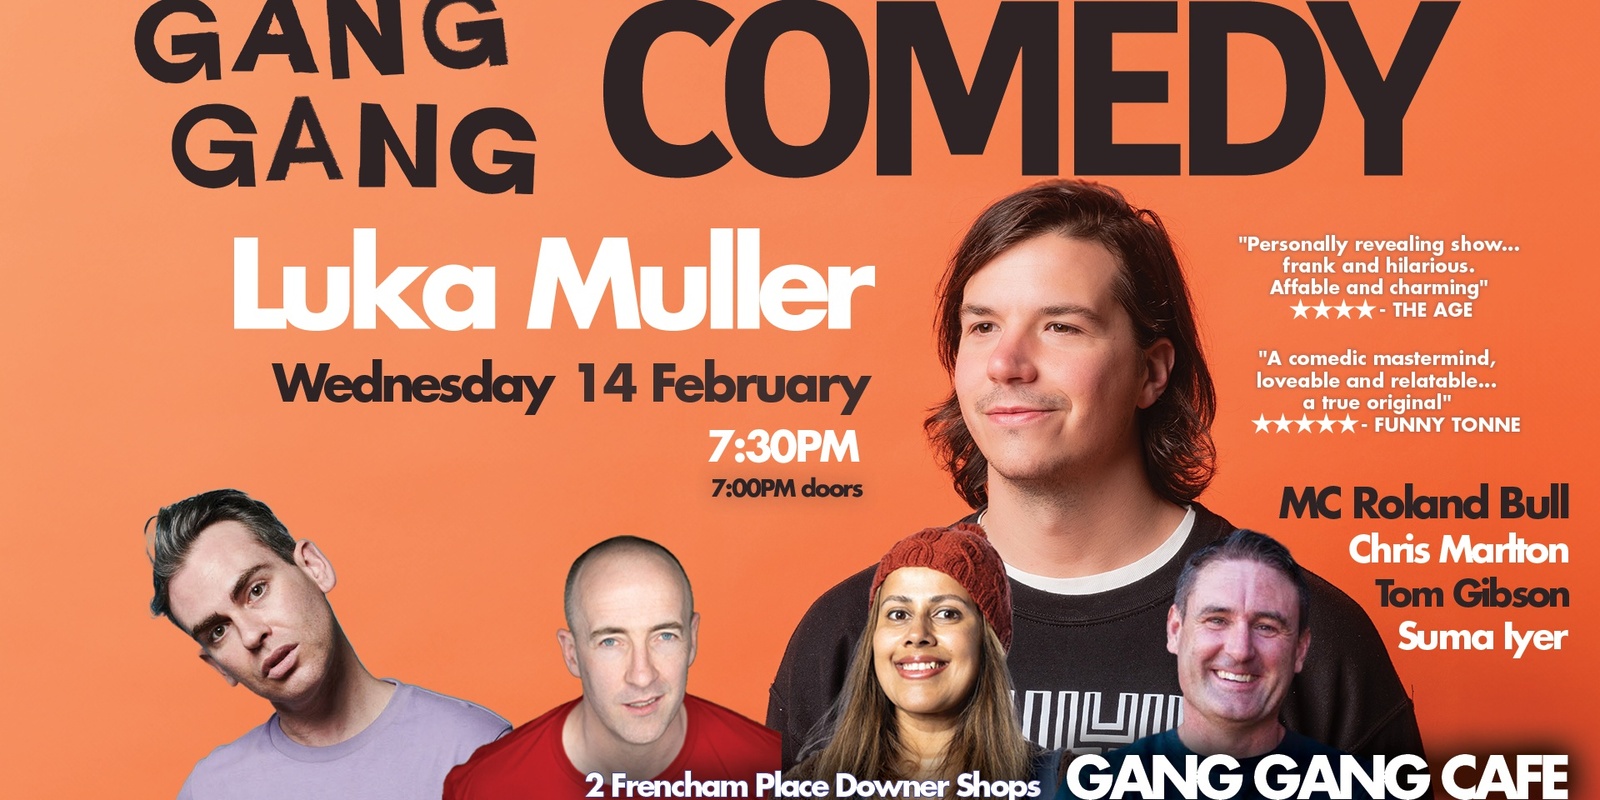 Banner image for Gang Gang Comedy - Luka Muller 